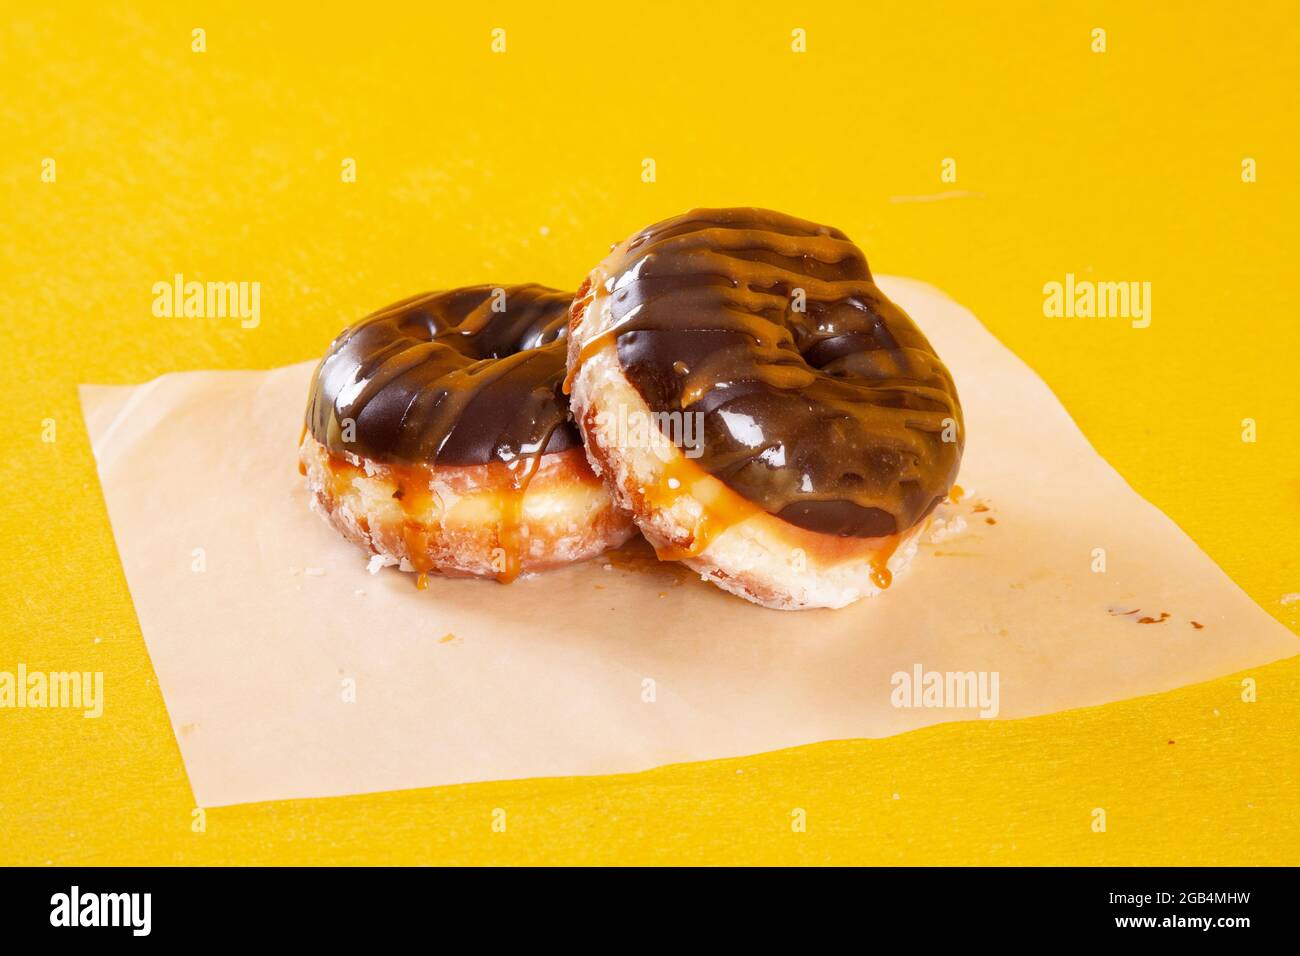 Chocolate caramel frosting brioche handmade gourmet doughnut Stock Photo